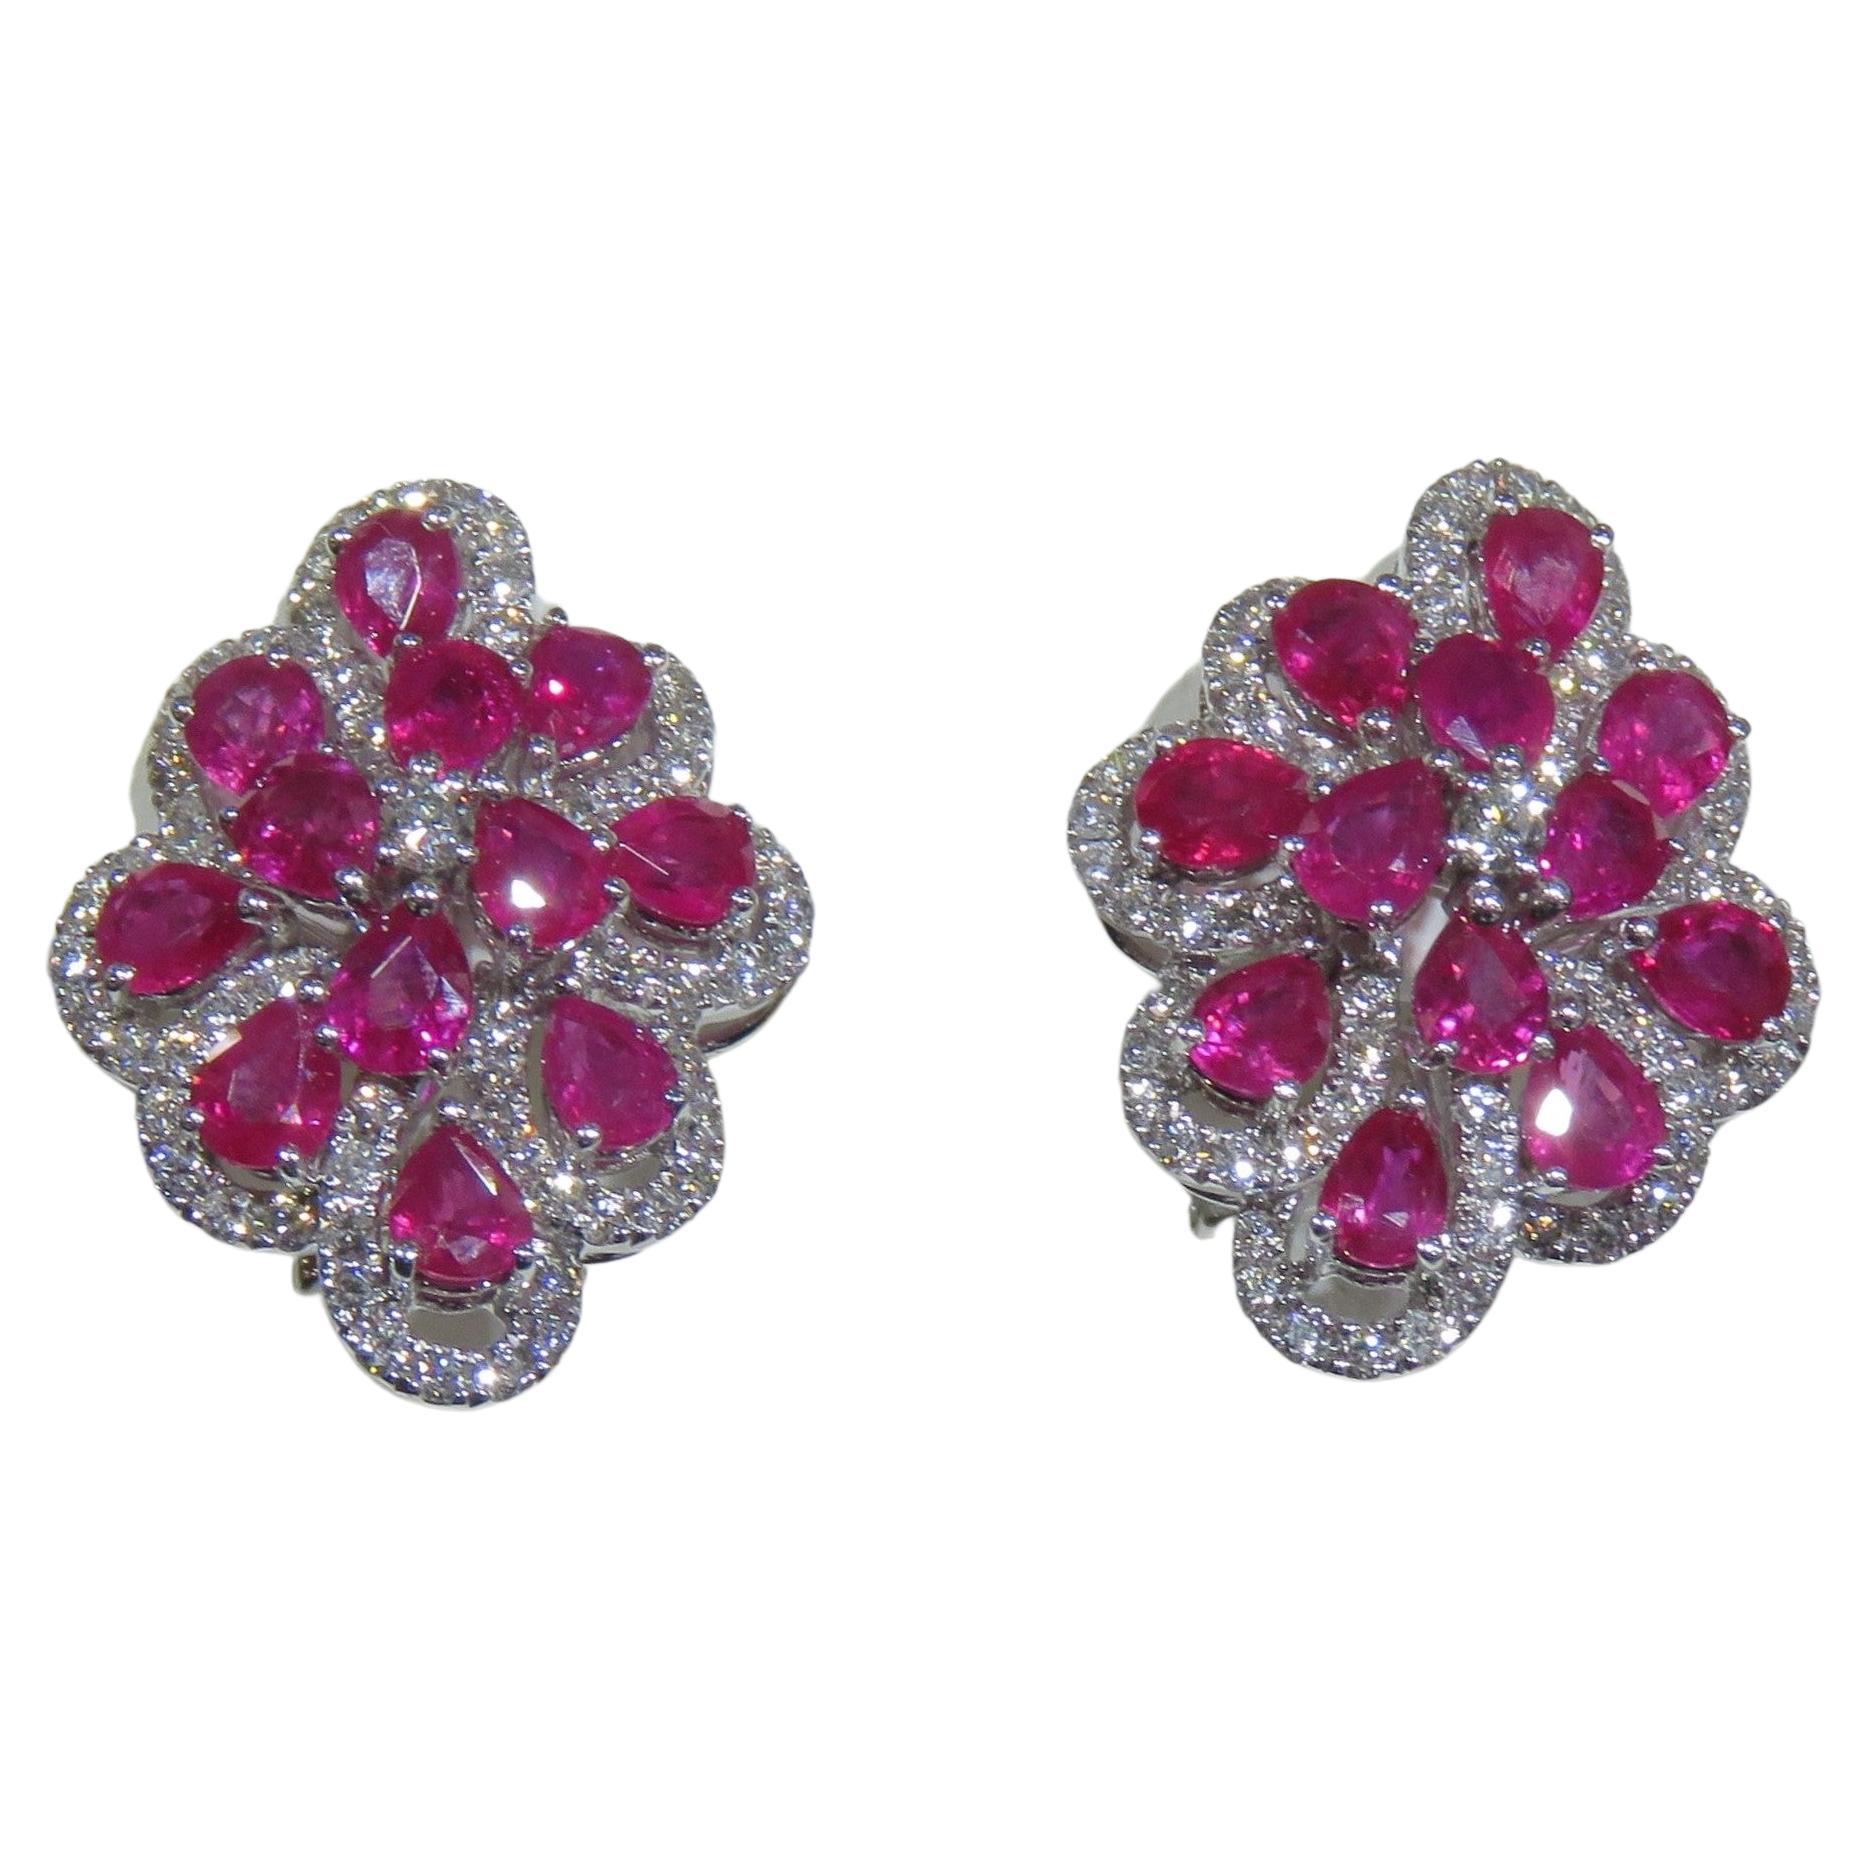 NWT 17,579 18KT Fancy Large Glittering Rare Fancy Colorful Ruby Diamond Earrings (Boucles d'oreilles avec diamant rubis)